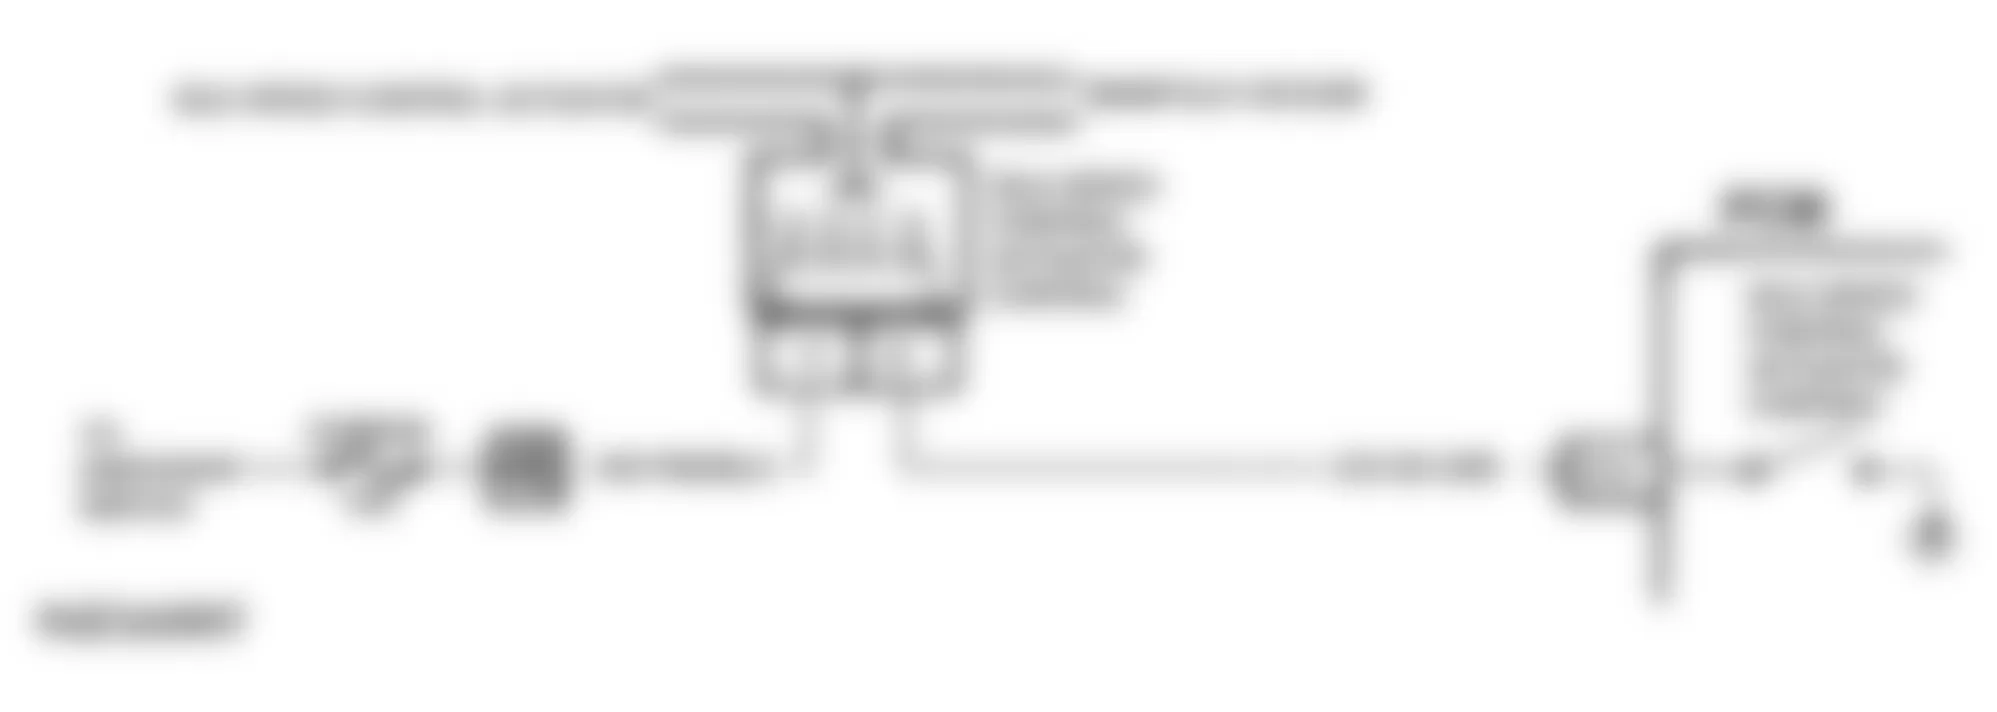 GMC Safari 1994 - Component Locations -  Code 36 Schematic (C & K Series) Idle Speed Actuator Fault